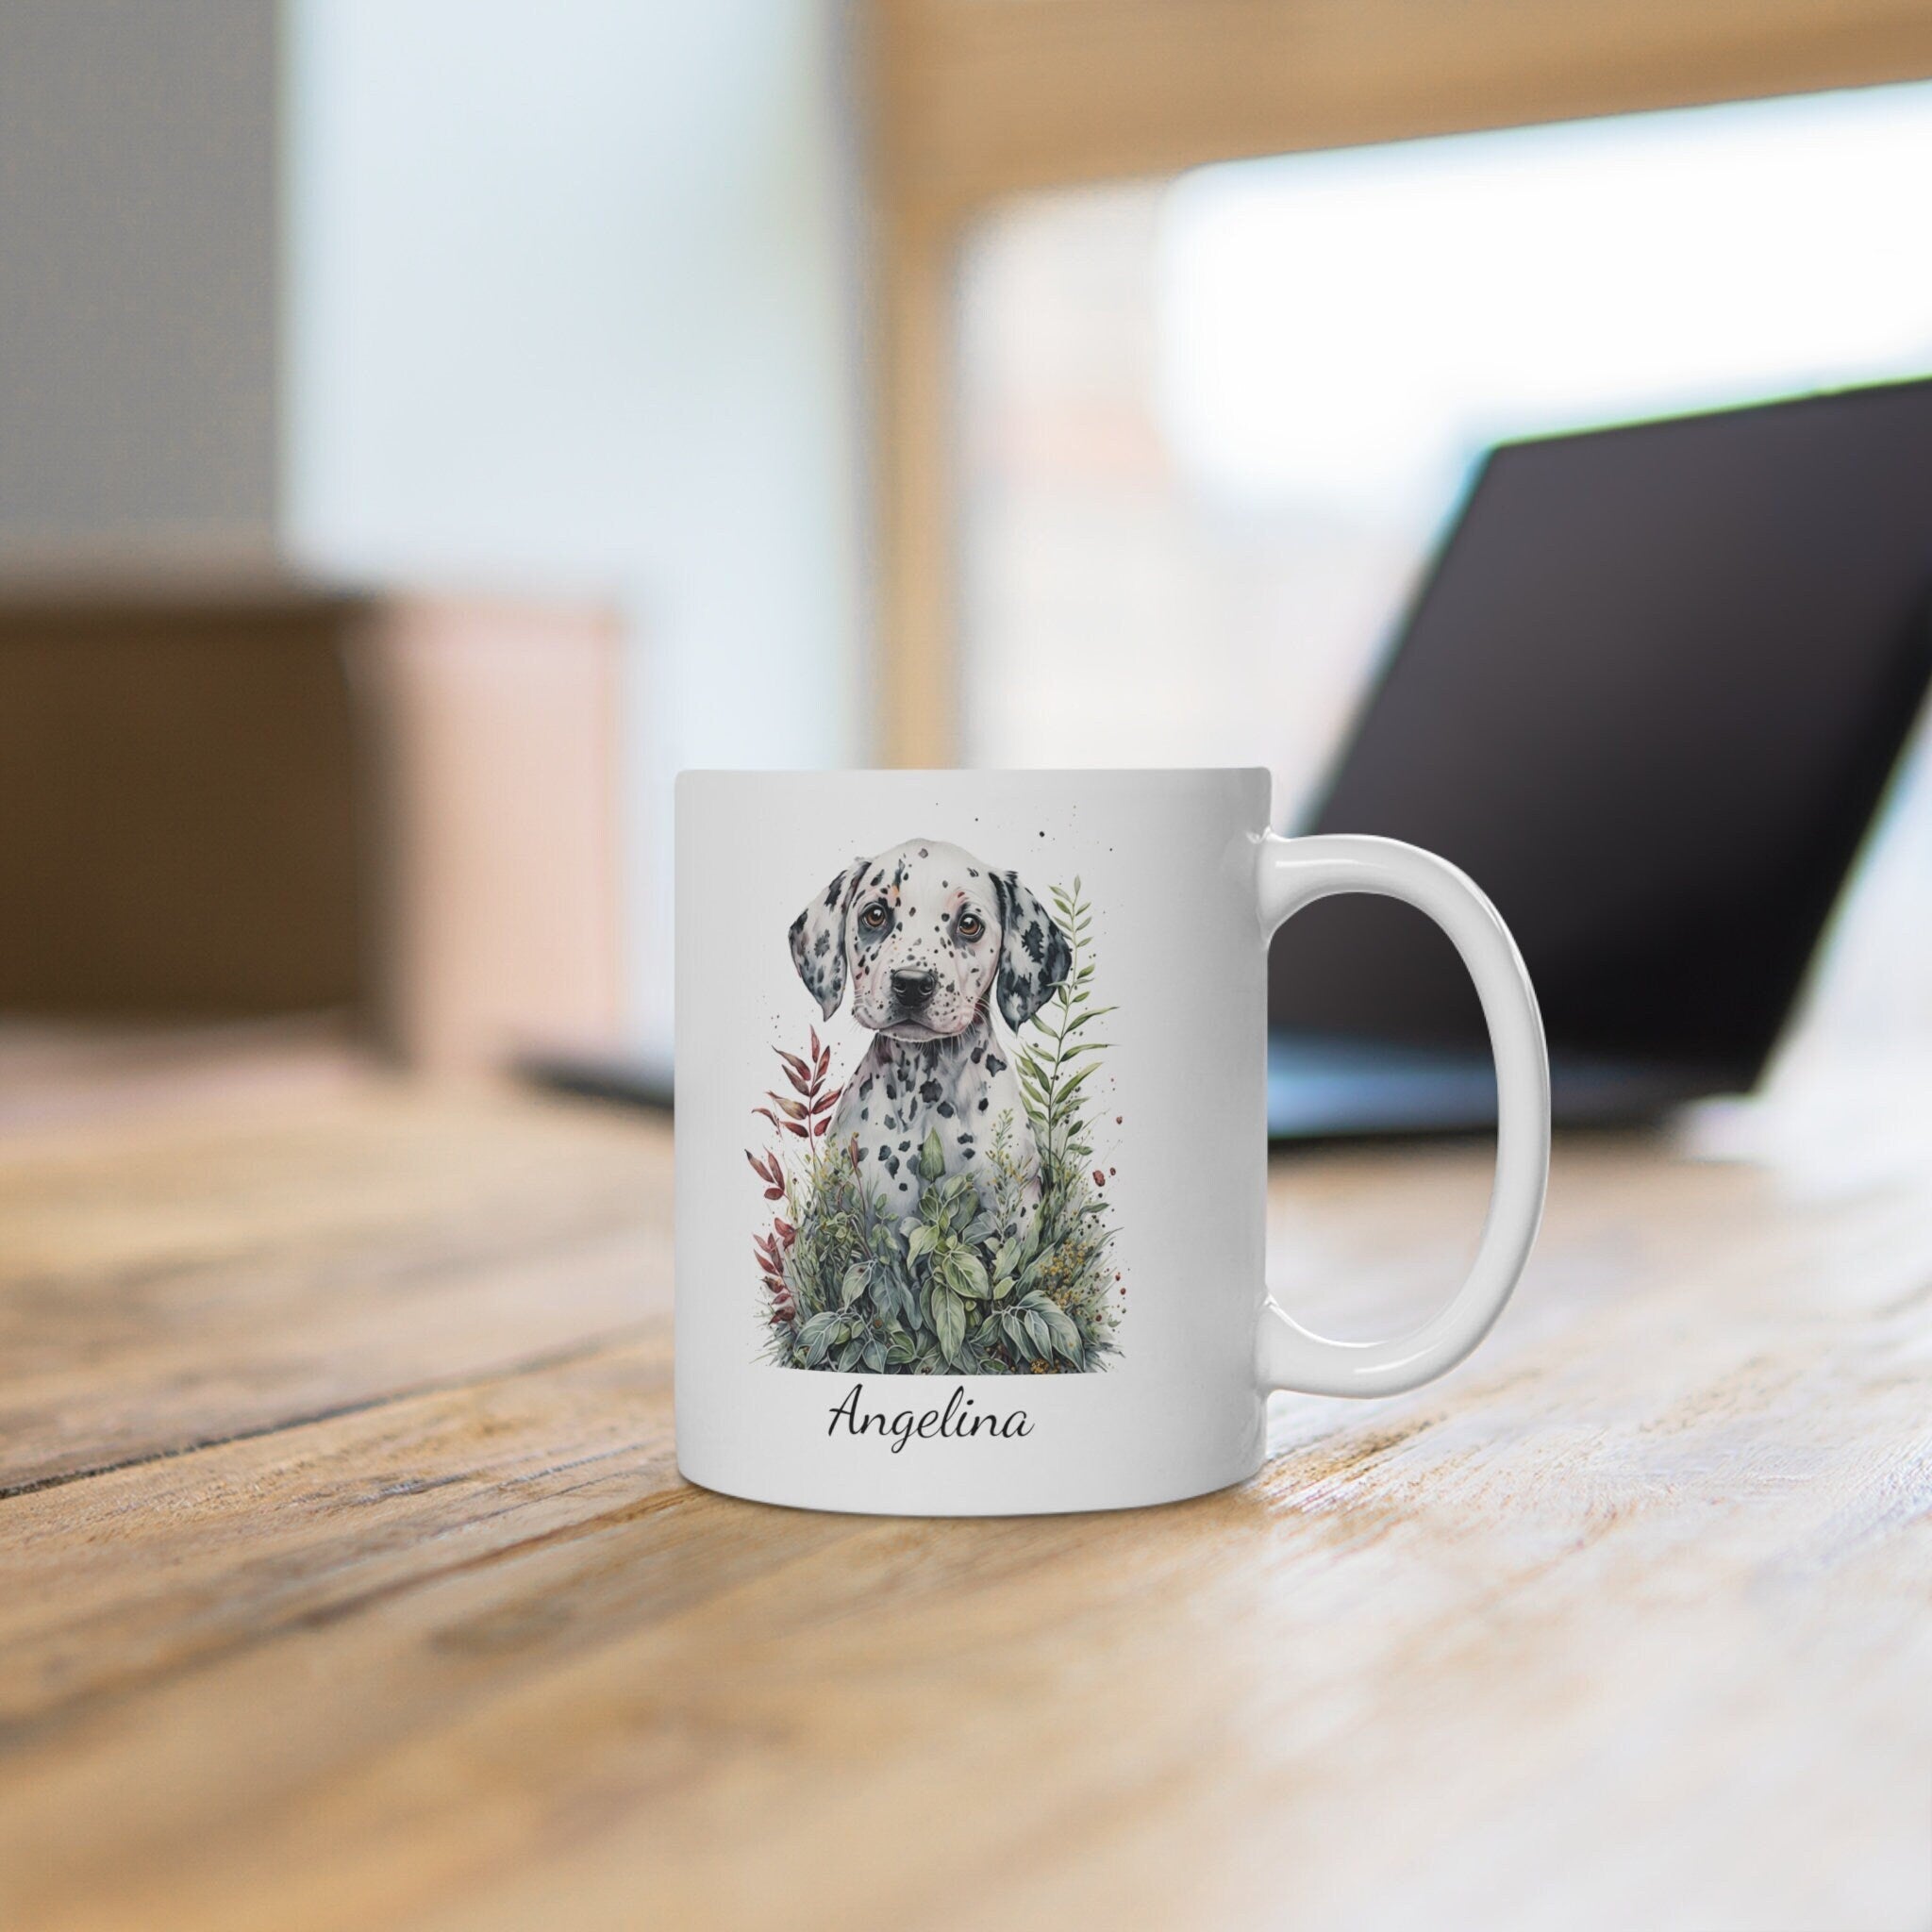 Personalized Dalmatian Coffee Mug